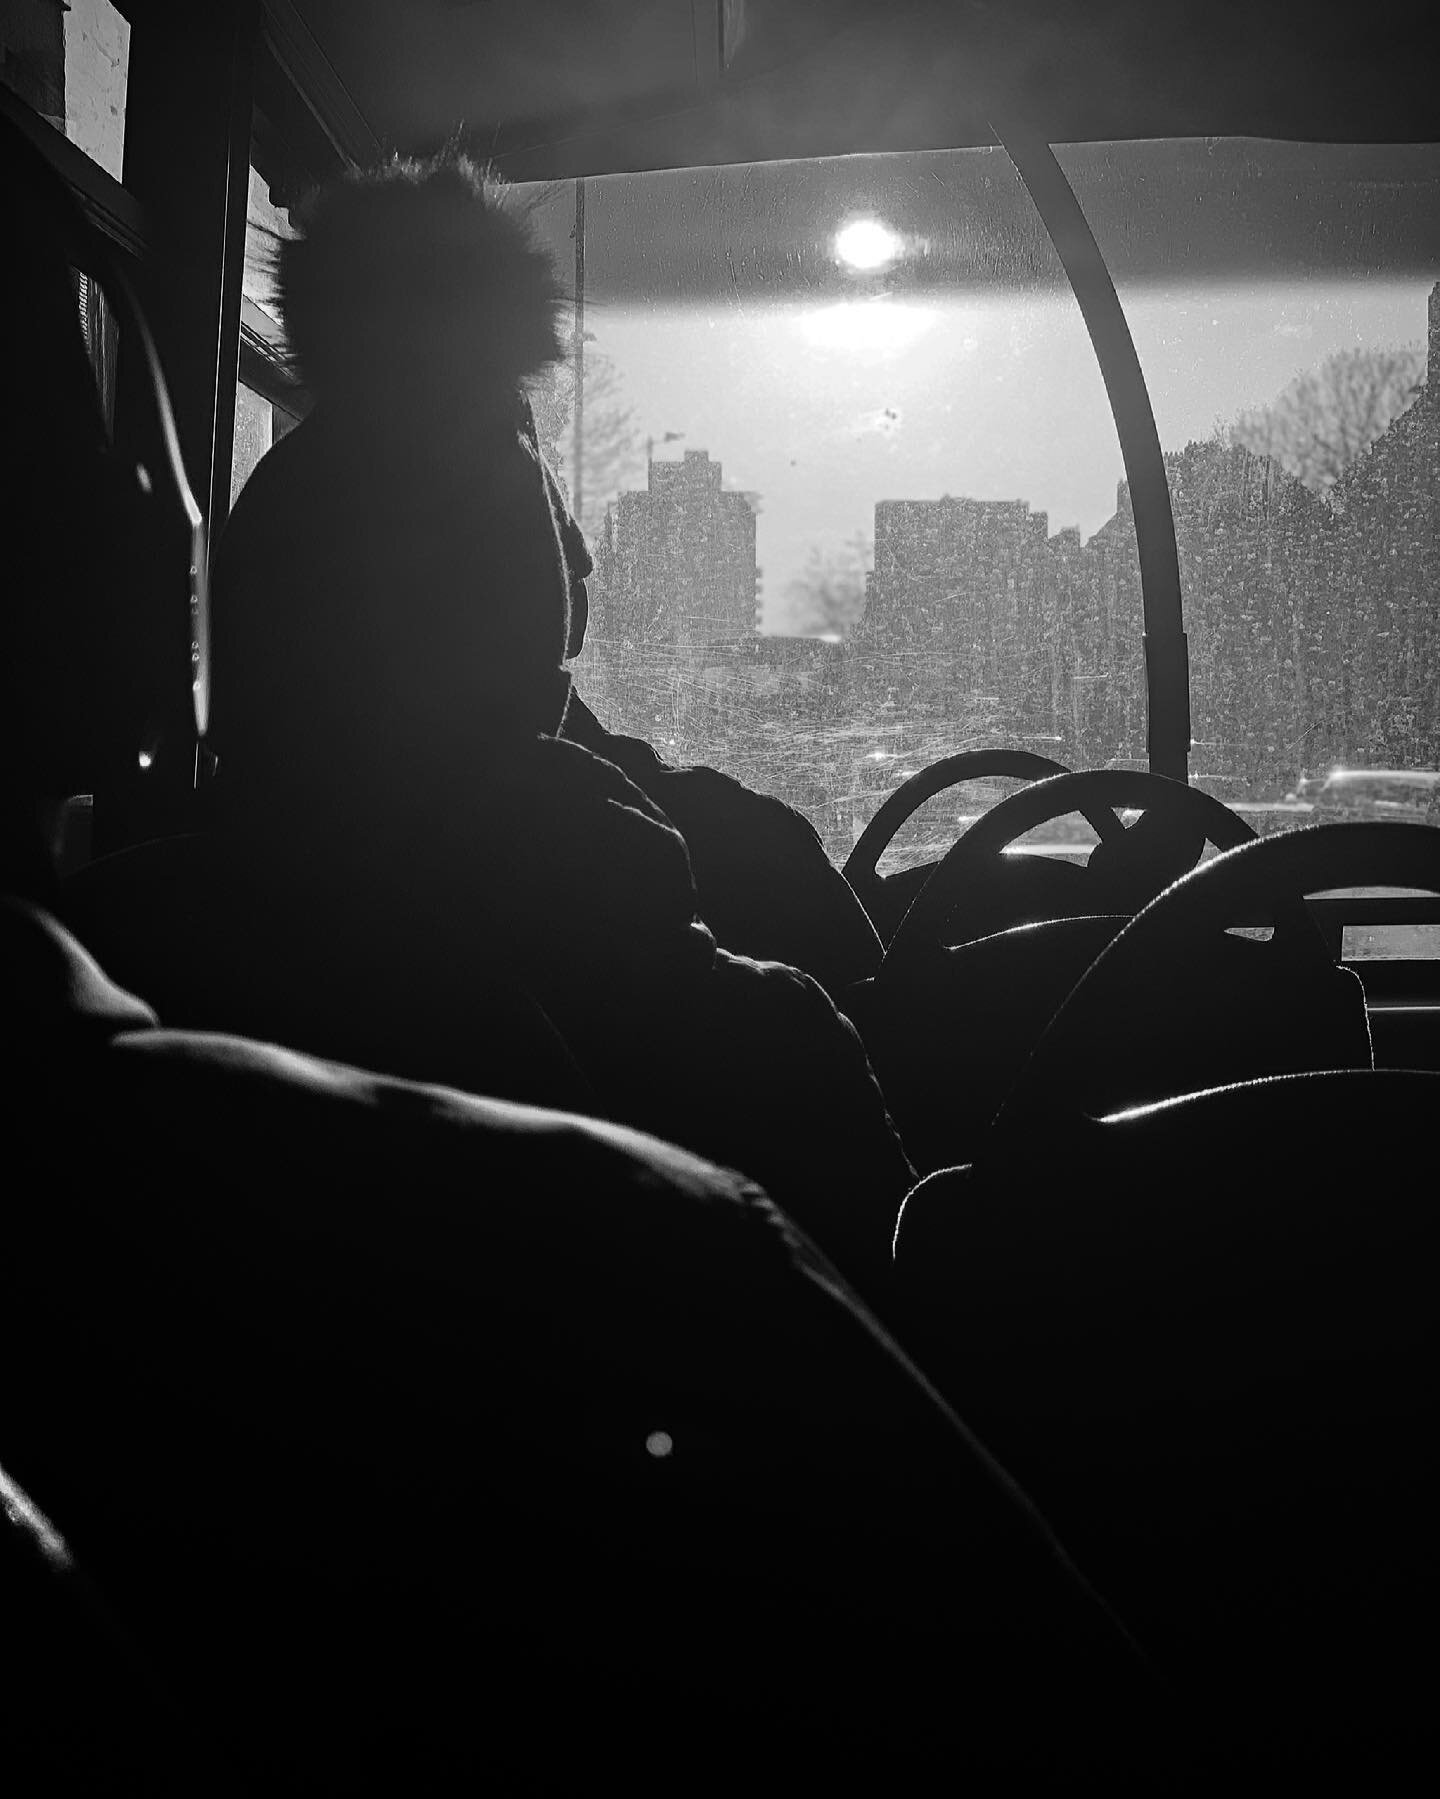 Commute (BC)
~
#anapryor #anapryorshoots #amateurphotographer #nikon #nikond5000 #nikonphotography #shotwithnikon #londonphotographer #picoftheday #pictureoftheday #photooftheday #photographyislife #capture #photographyaddict #londonphotographer #pho